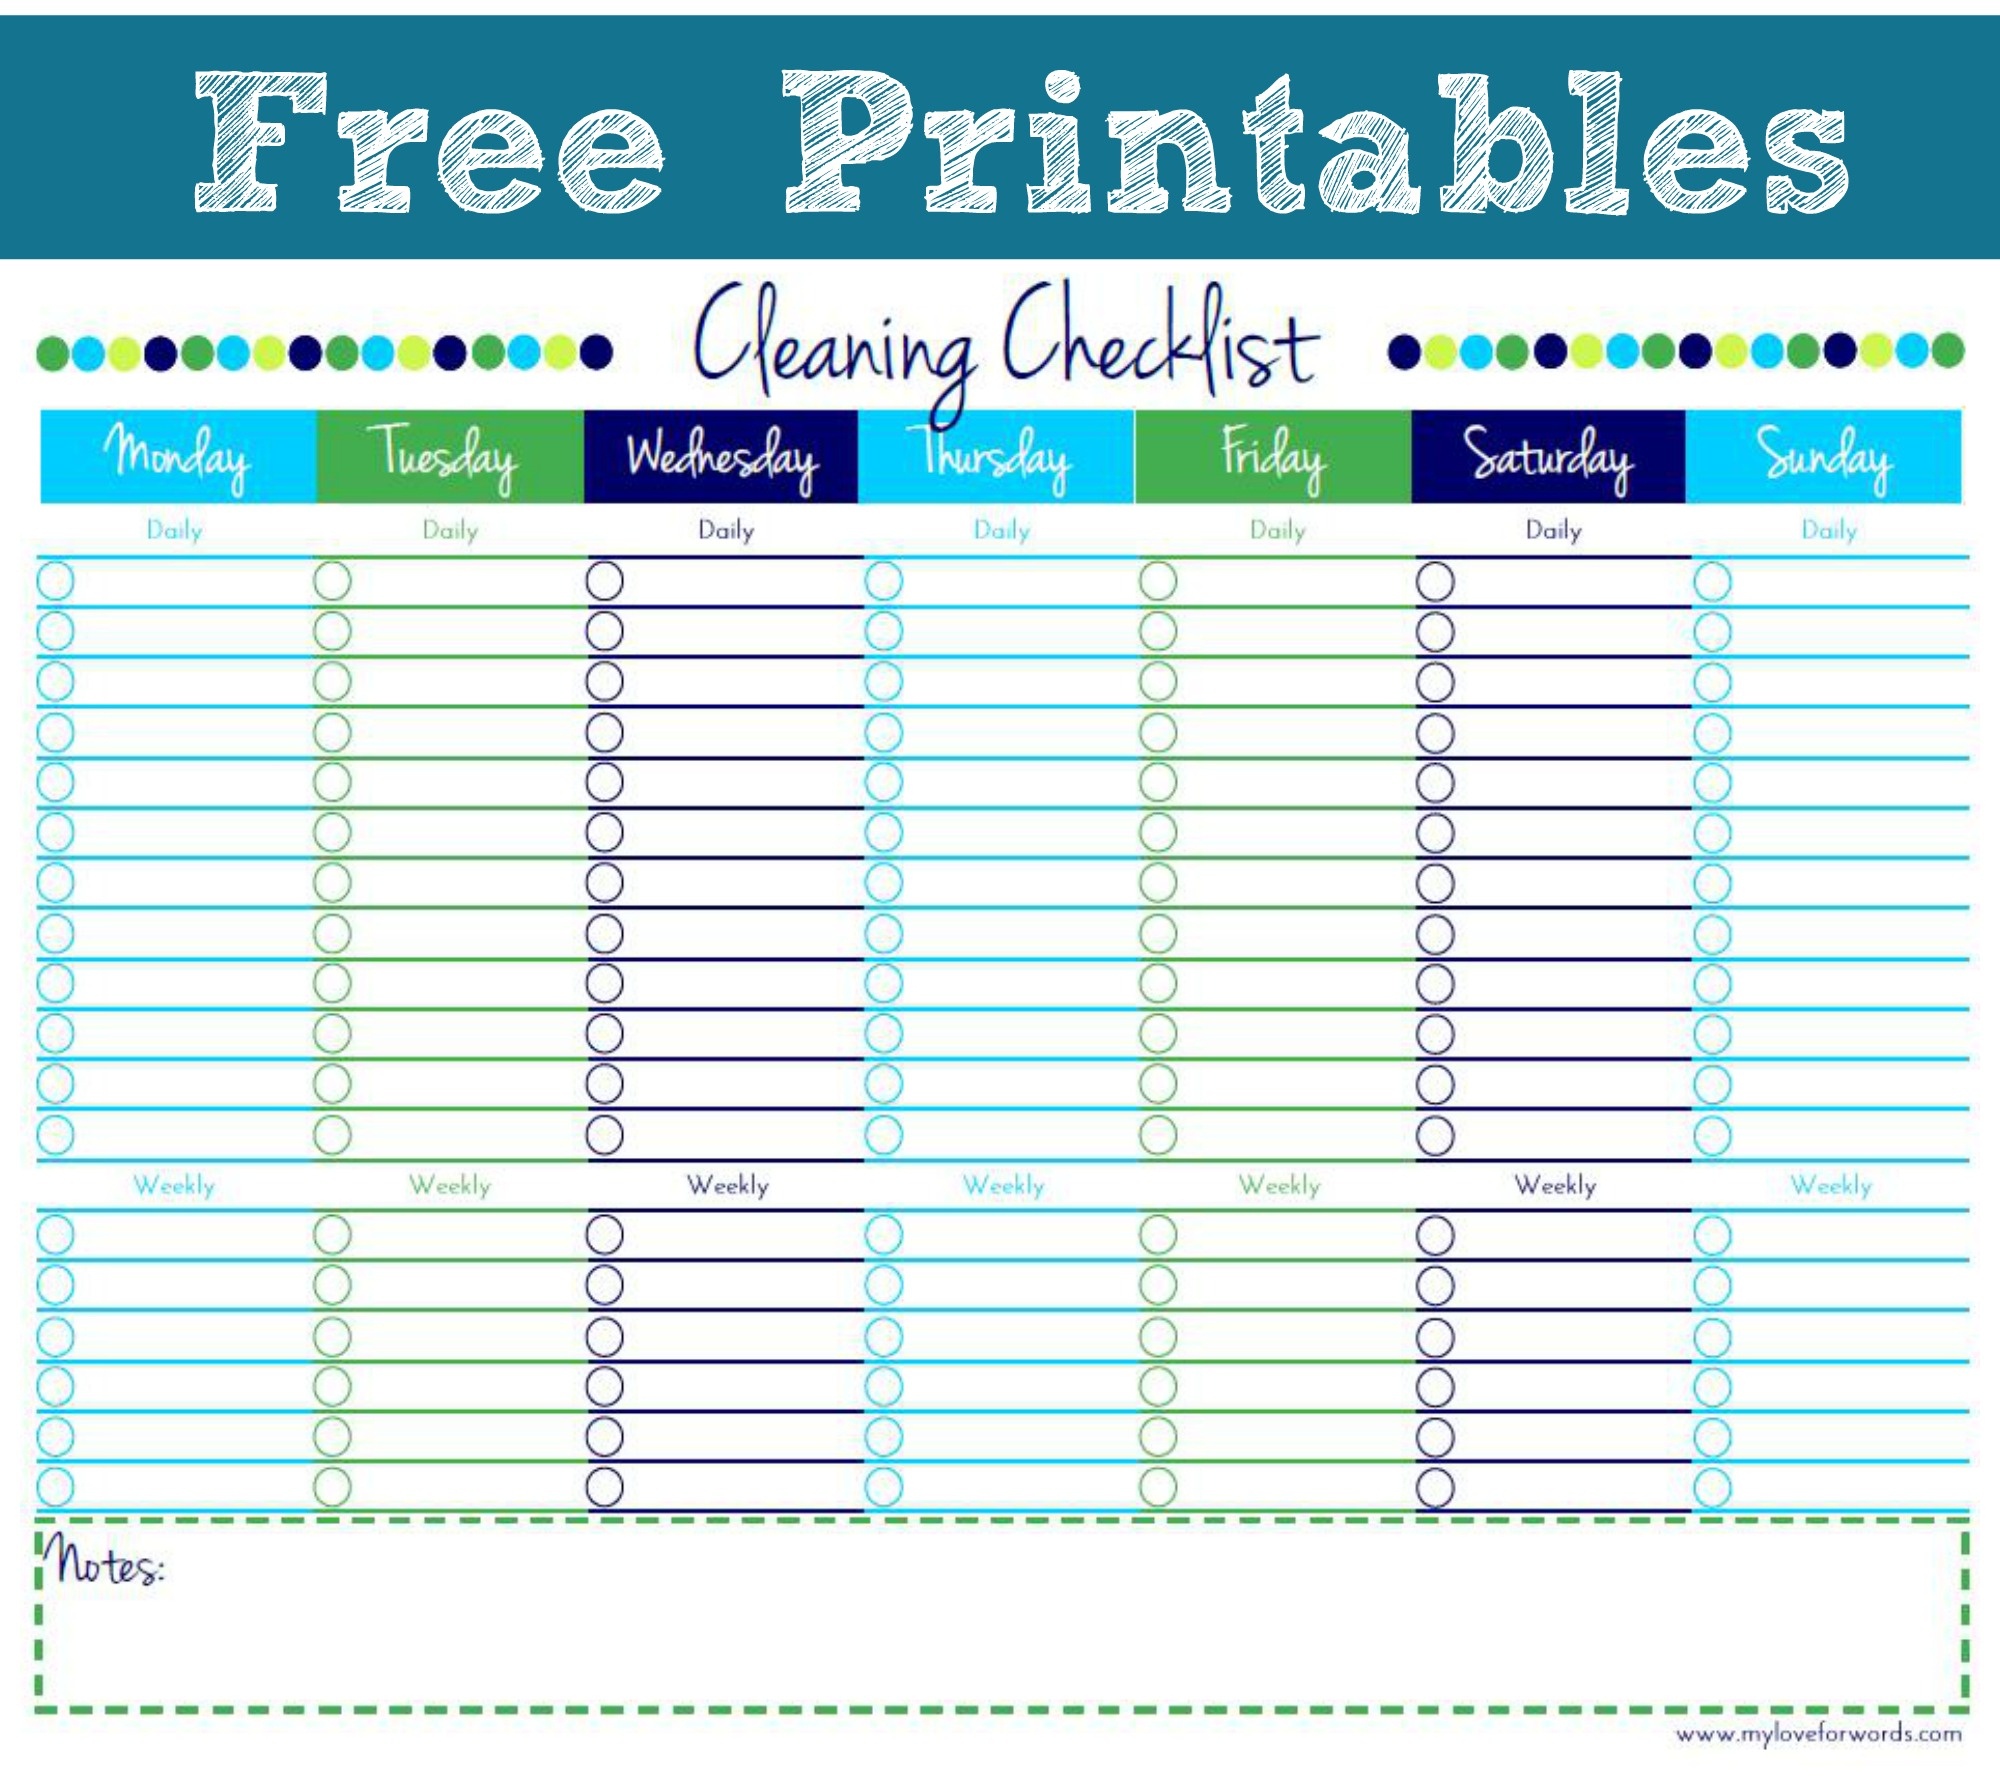 Cleaning Checklist {Free Printable} - Free Printable Checklist